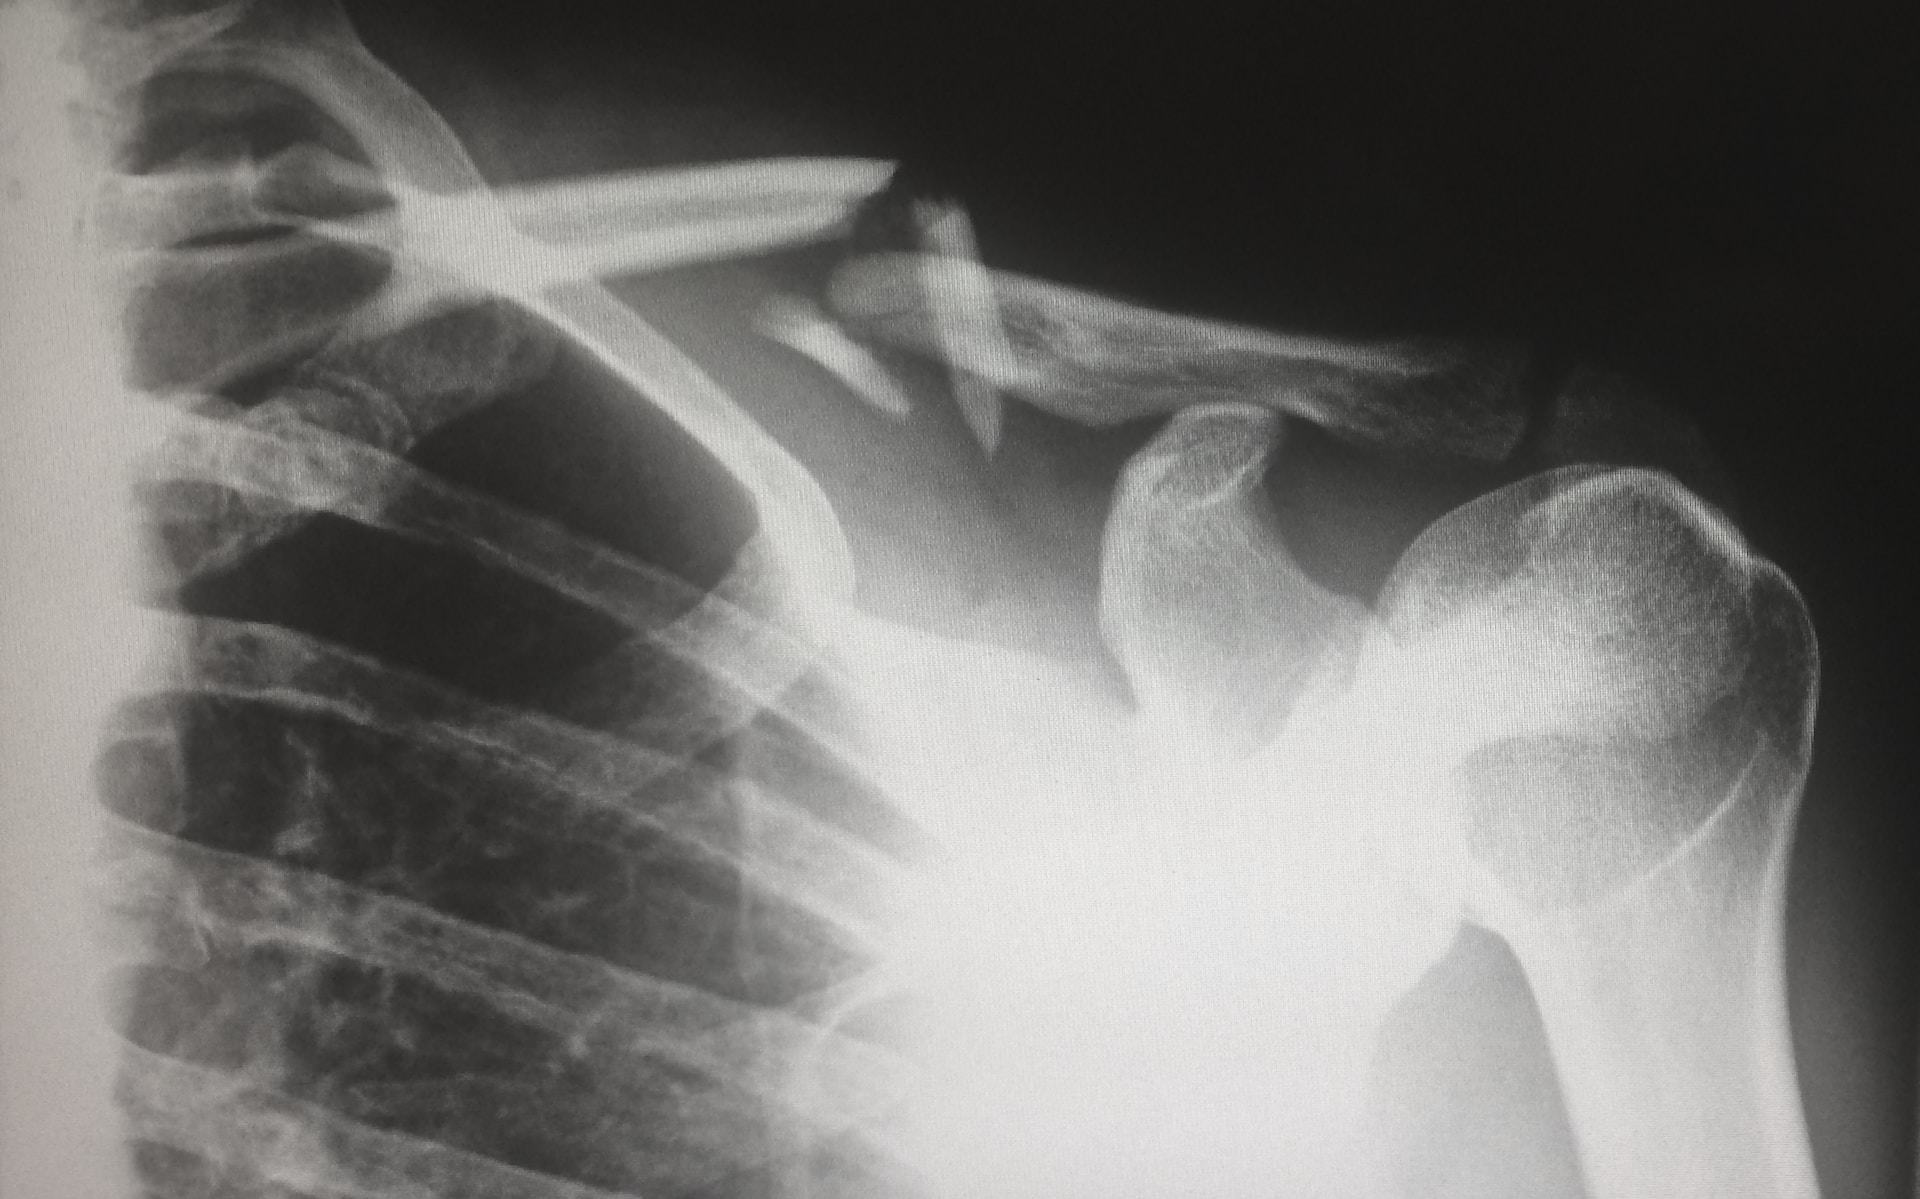 broken bone x-ray -personal injury lawsuits in Arizona